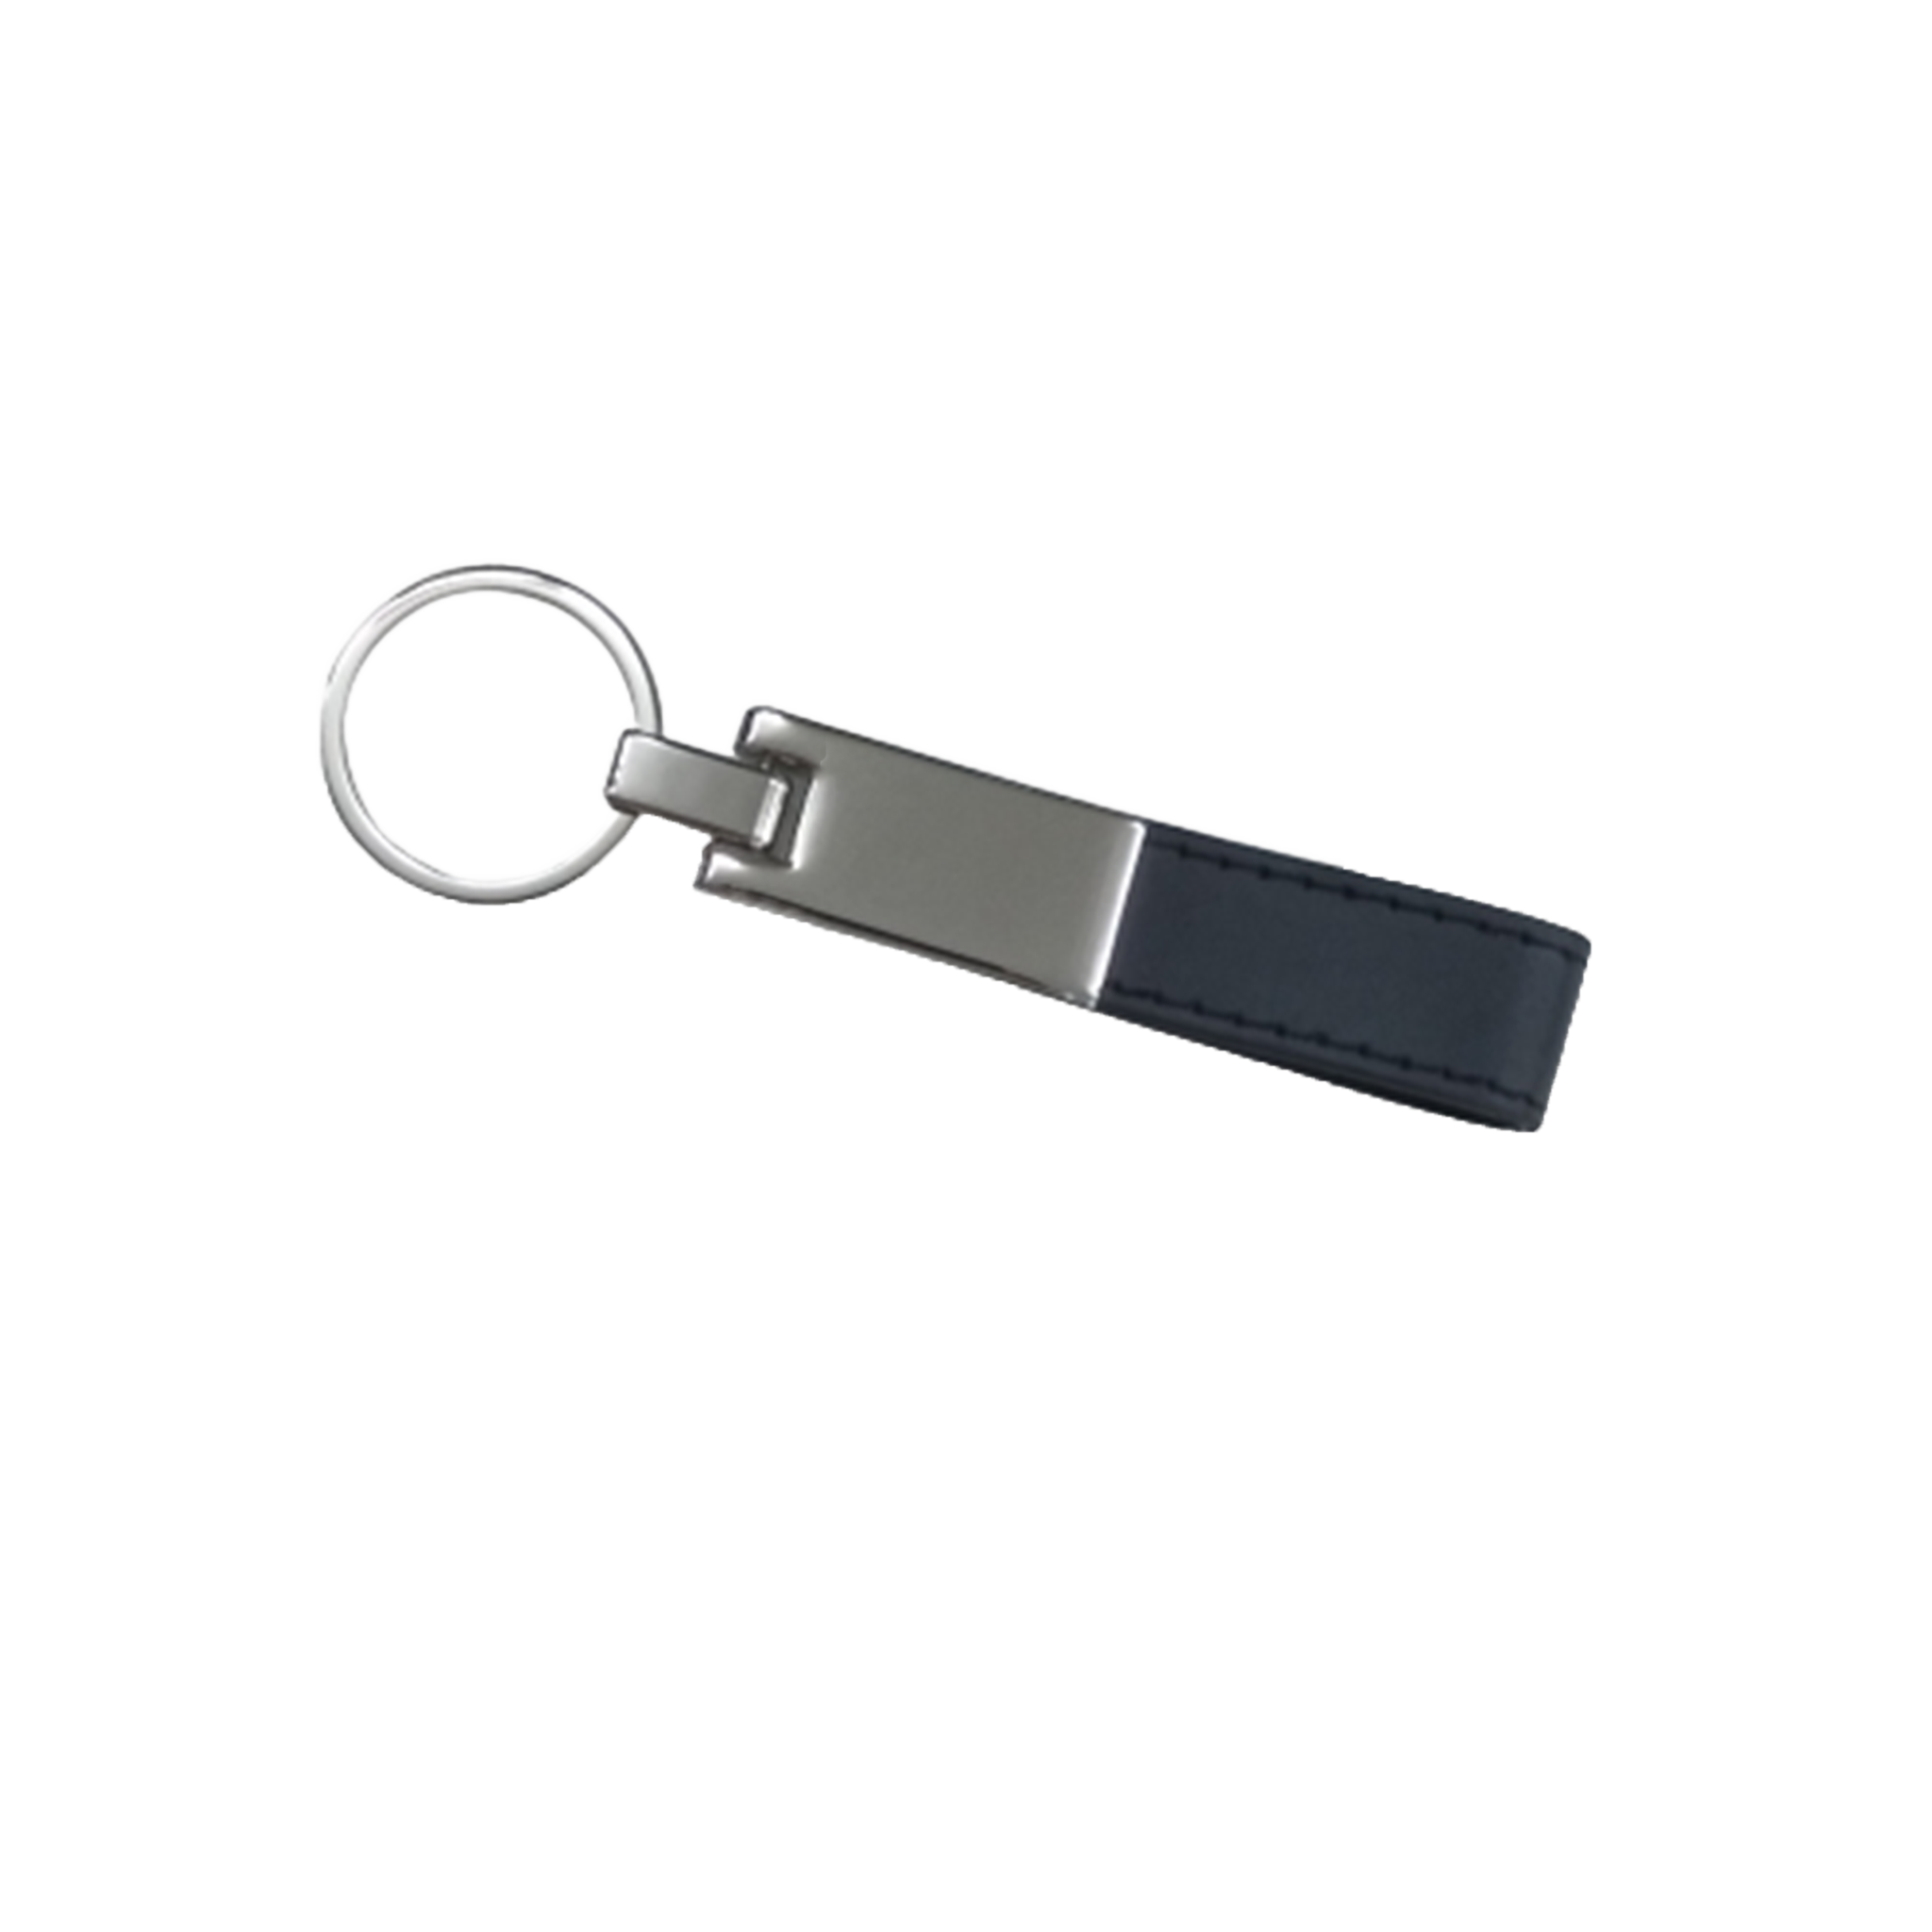 Metallic Leather Key Chain - 200 Pack - Black